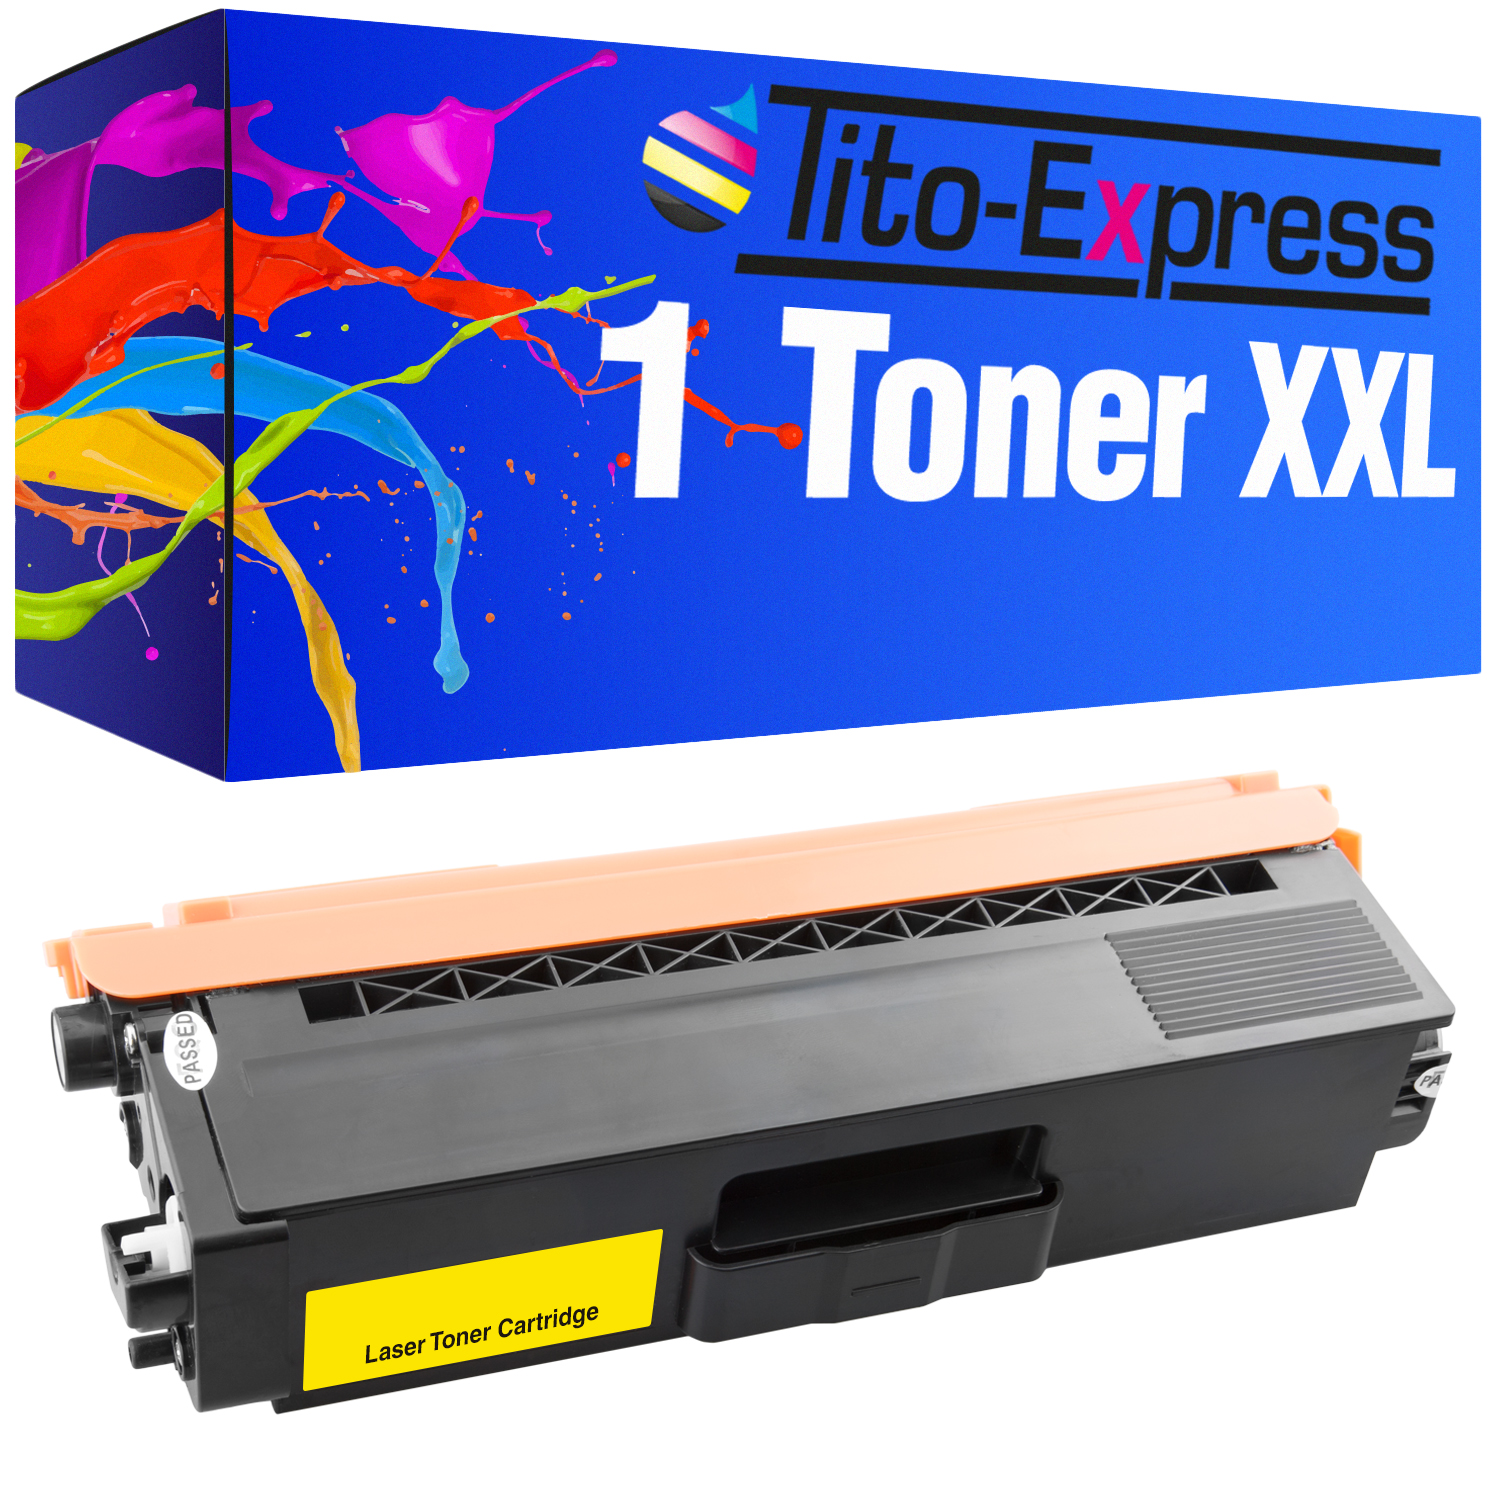 TITO-EXPRESS PLATINUMSERIE 1 yellow Toner TN-325 Brother ersetzt Toner (TN325)